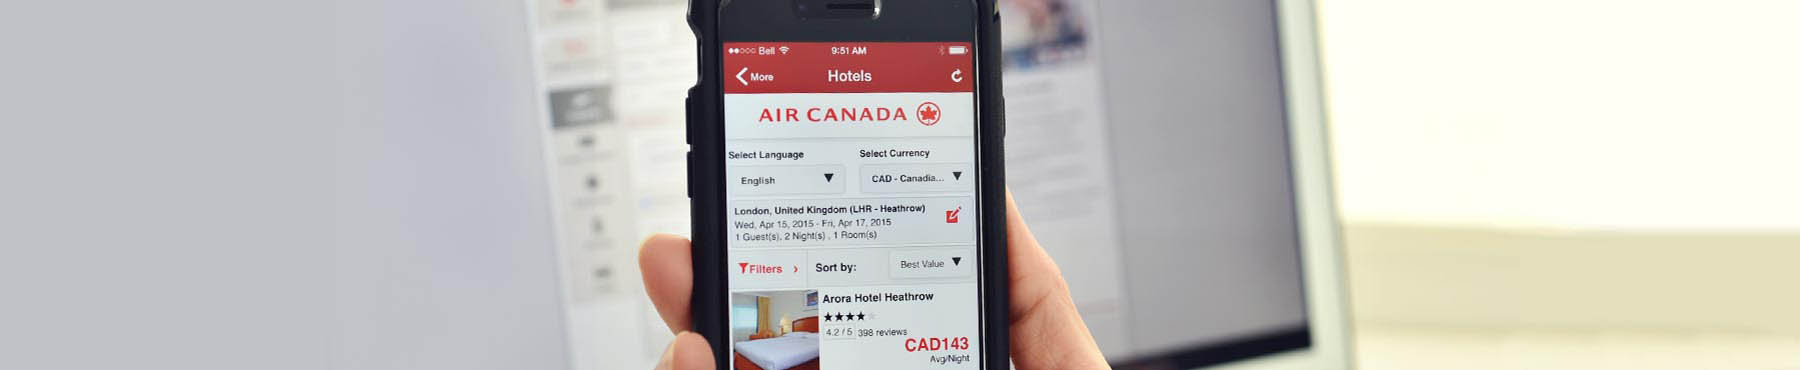 Air Canada mobile+